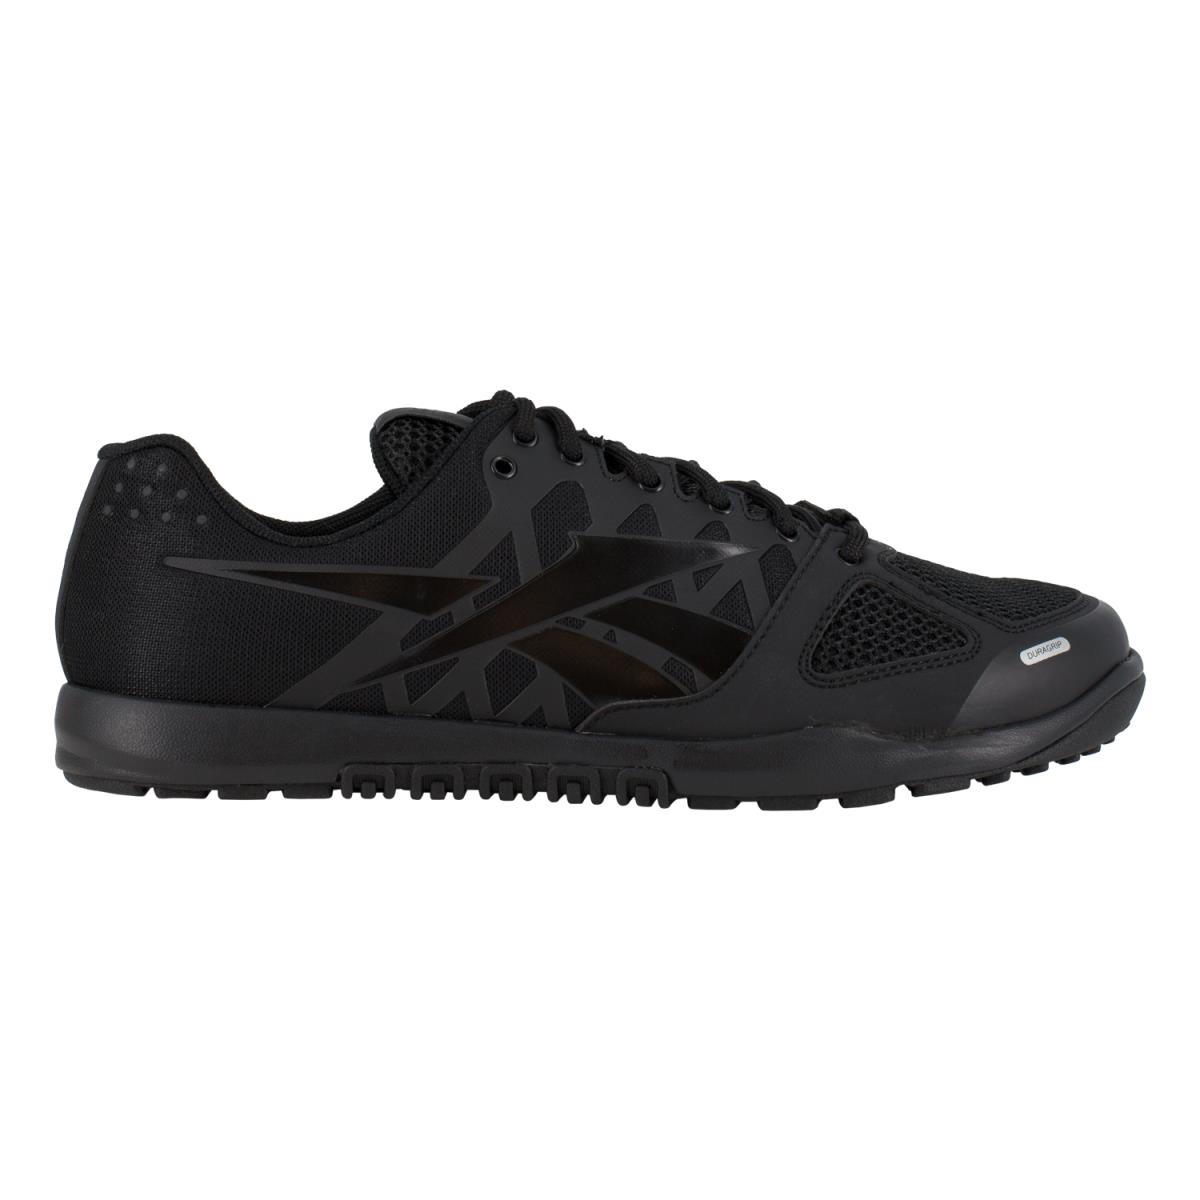 Reebok Mens Black Leather Work Shoes Oxford Nano Tactical W